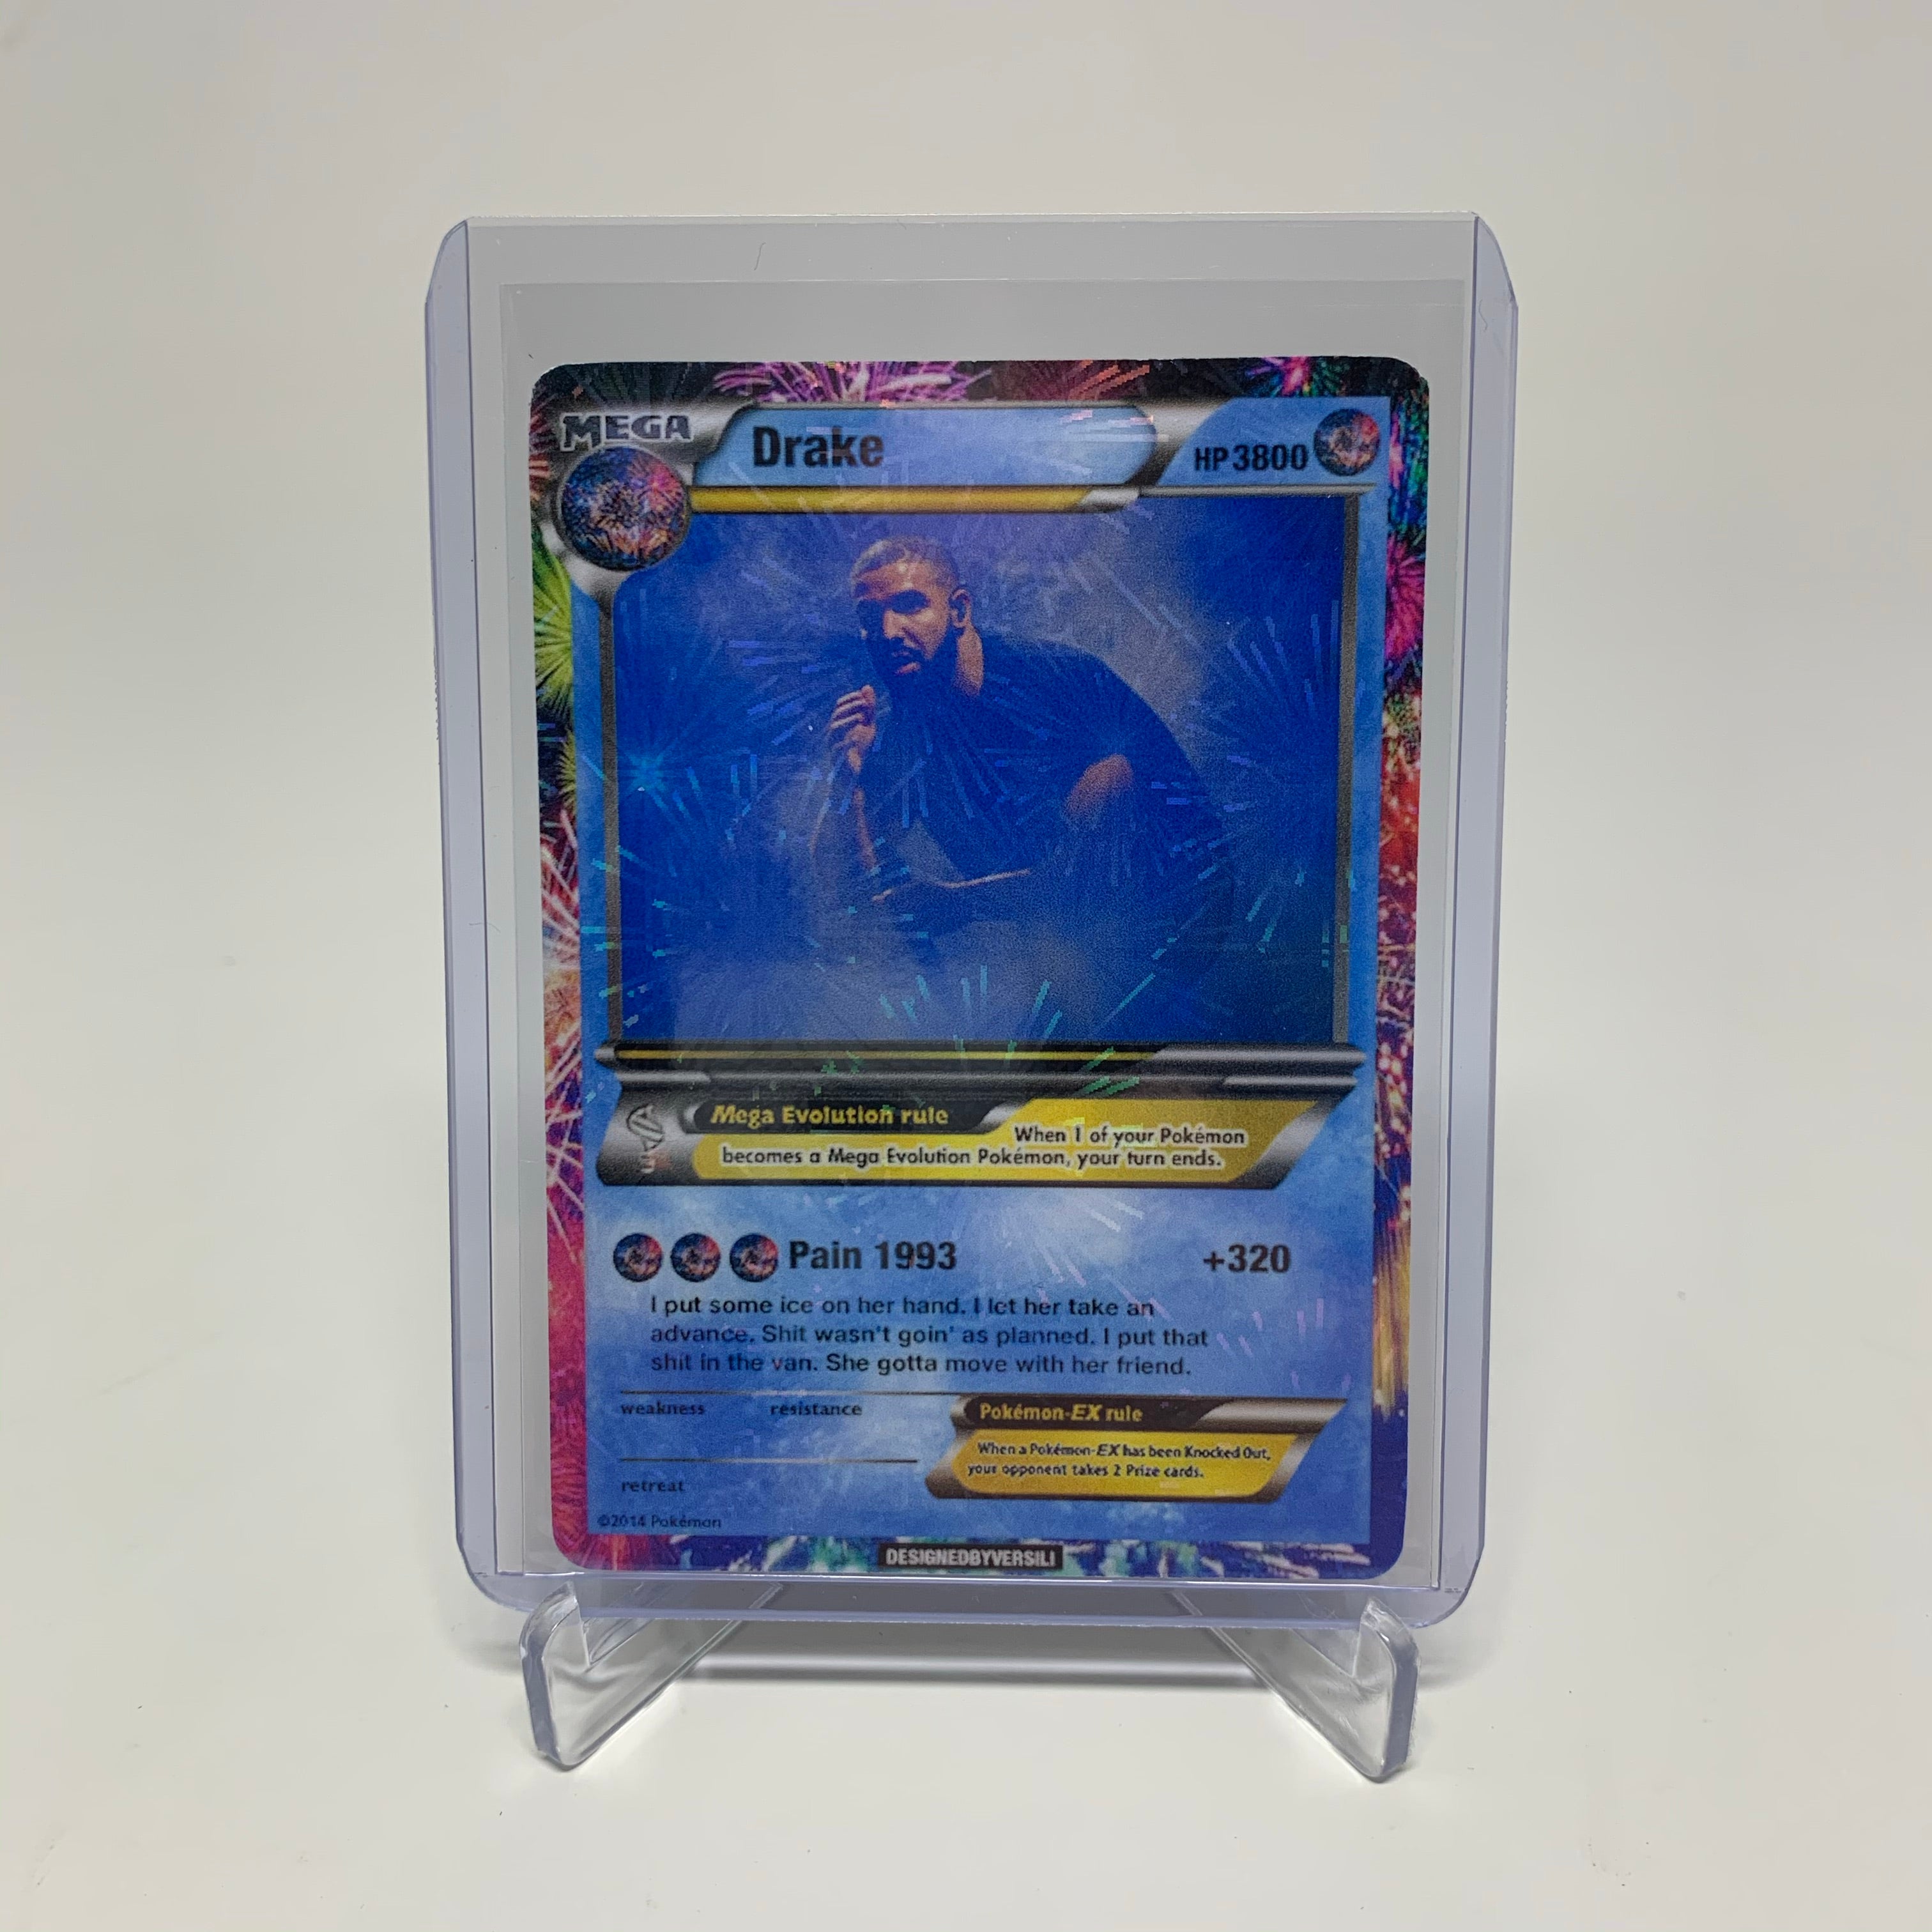 Drake Pokémon Card (4th of July)